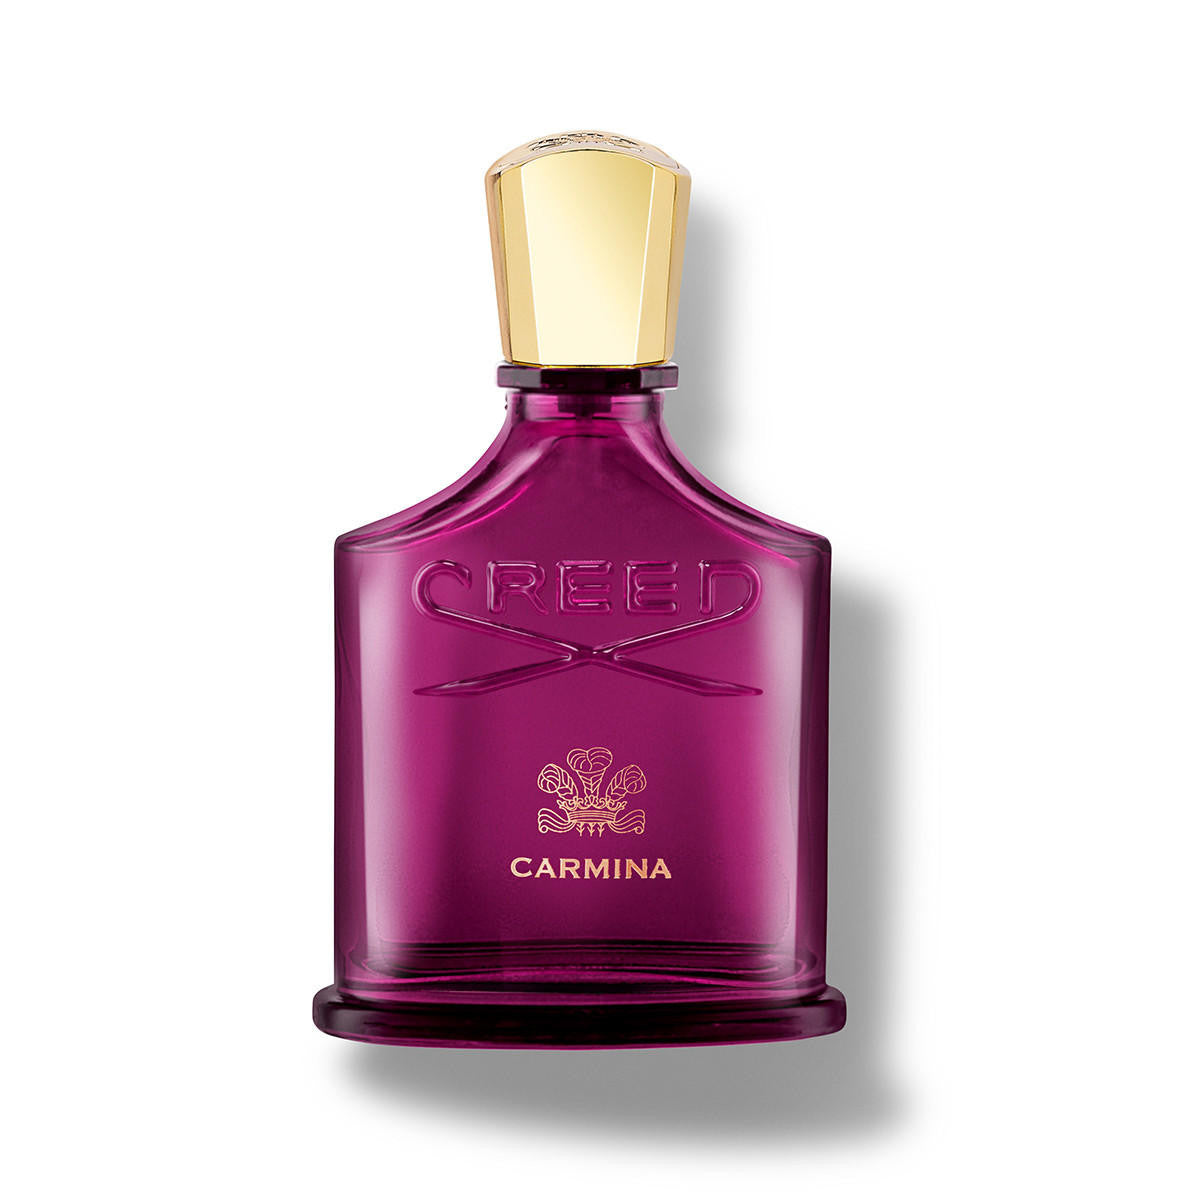  Creed CARMINA Eau de Parfum 